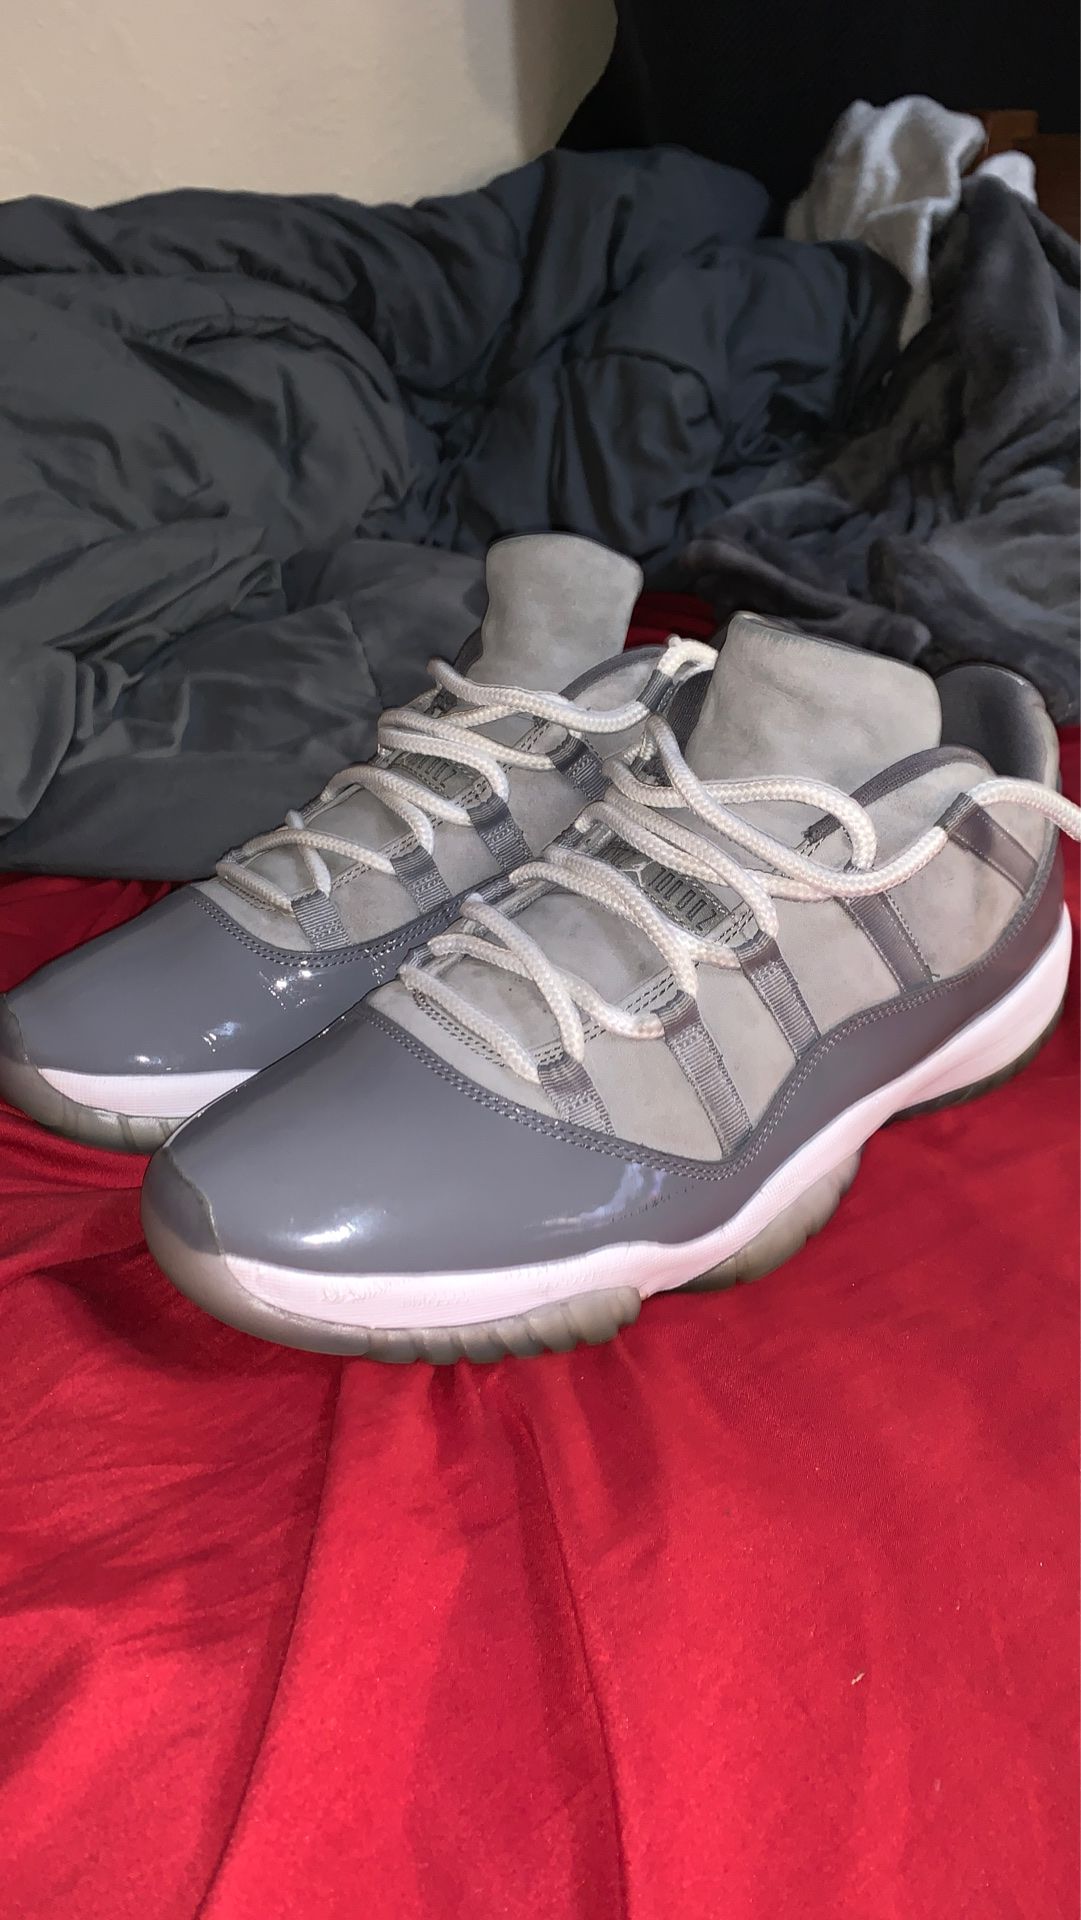 Jordan 11 cool grey size 14